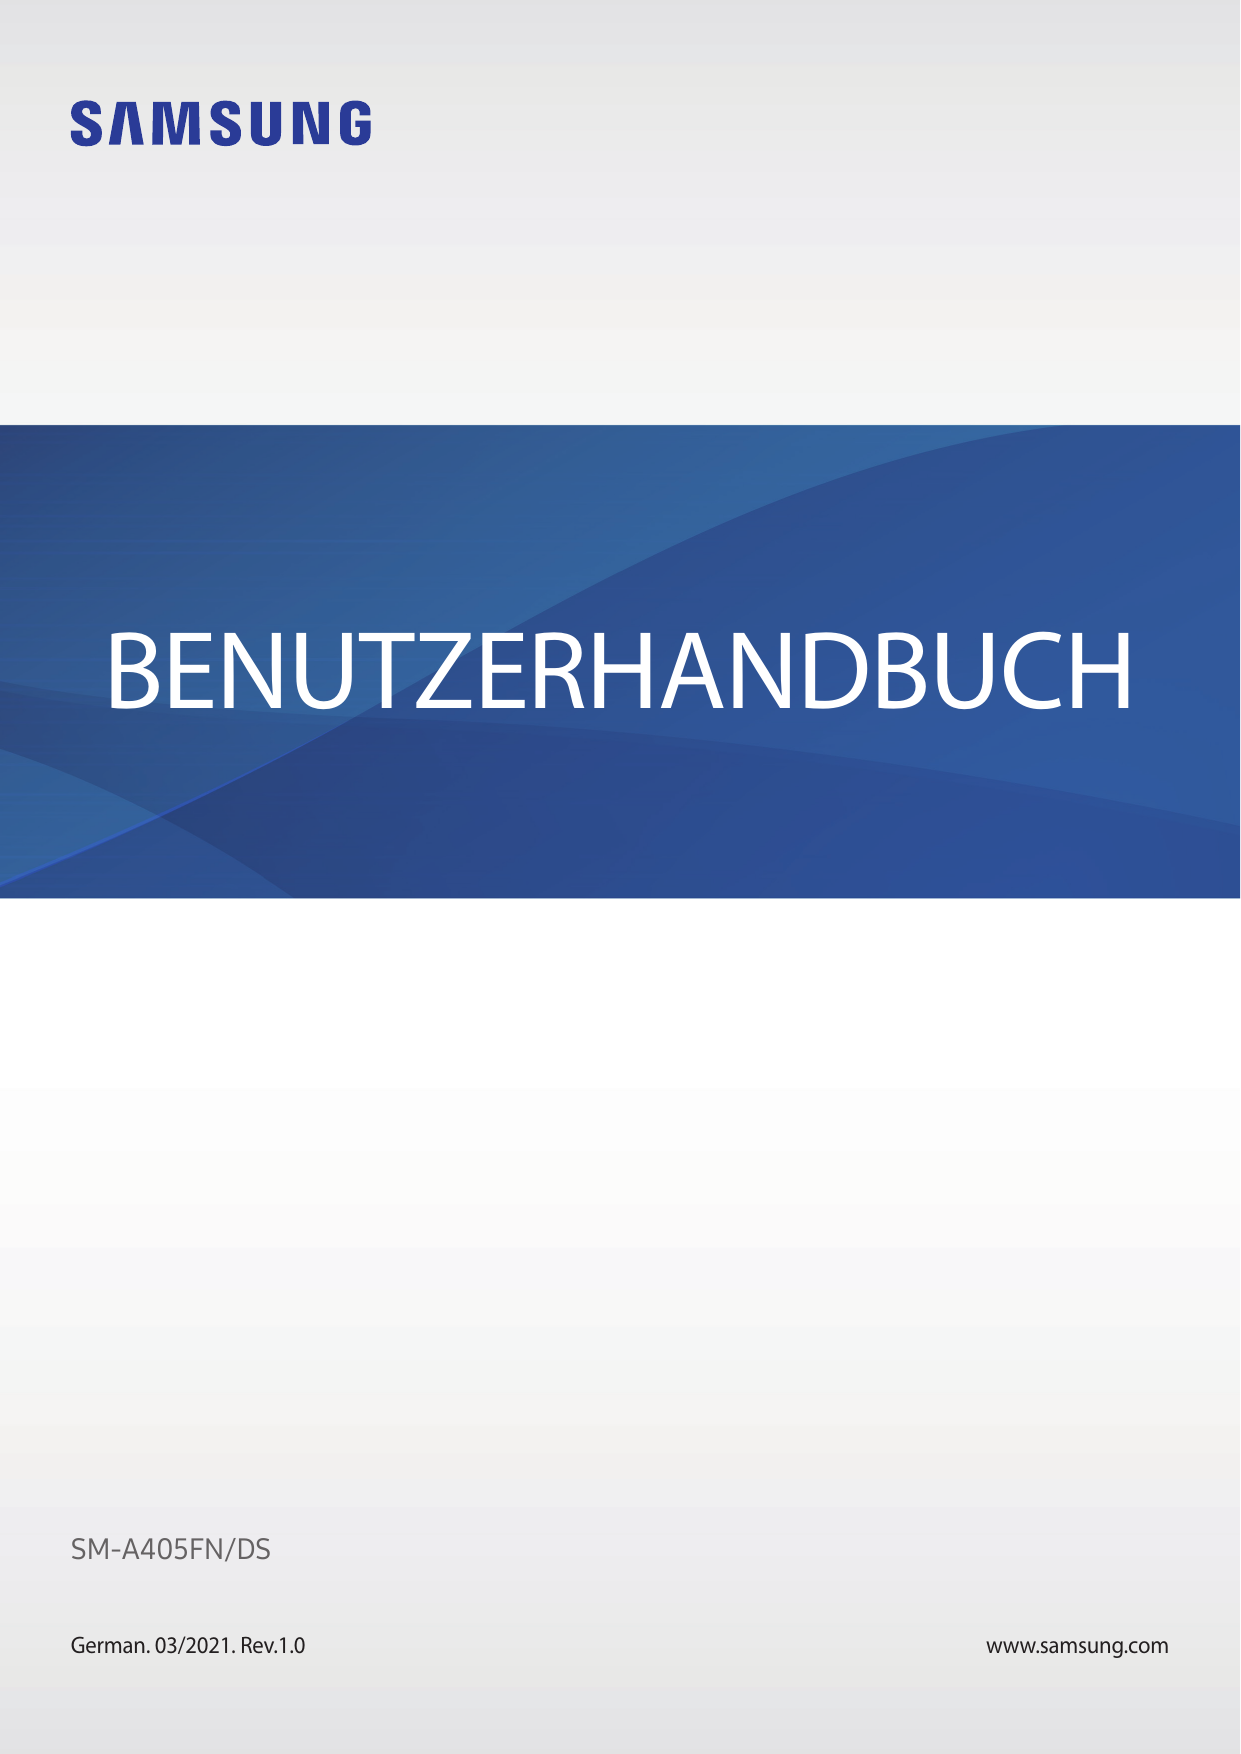 BENUTZERHANDBUCHSM-A405FN/DSGerman. 03/2021. Rev.1.0www.samsung.com